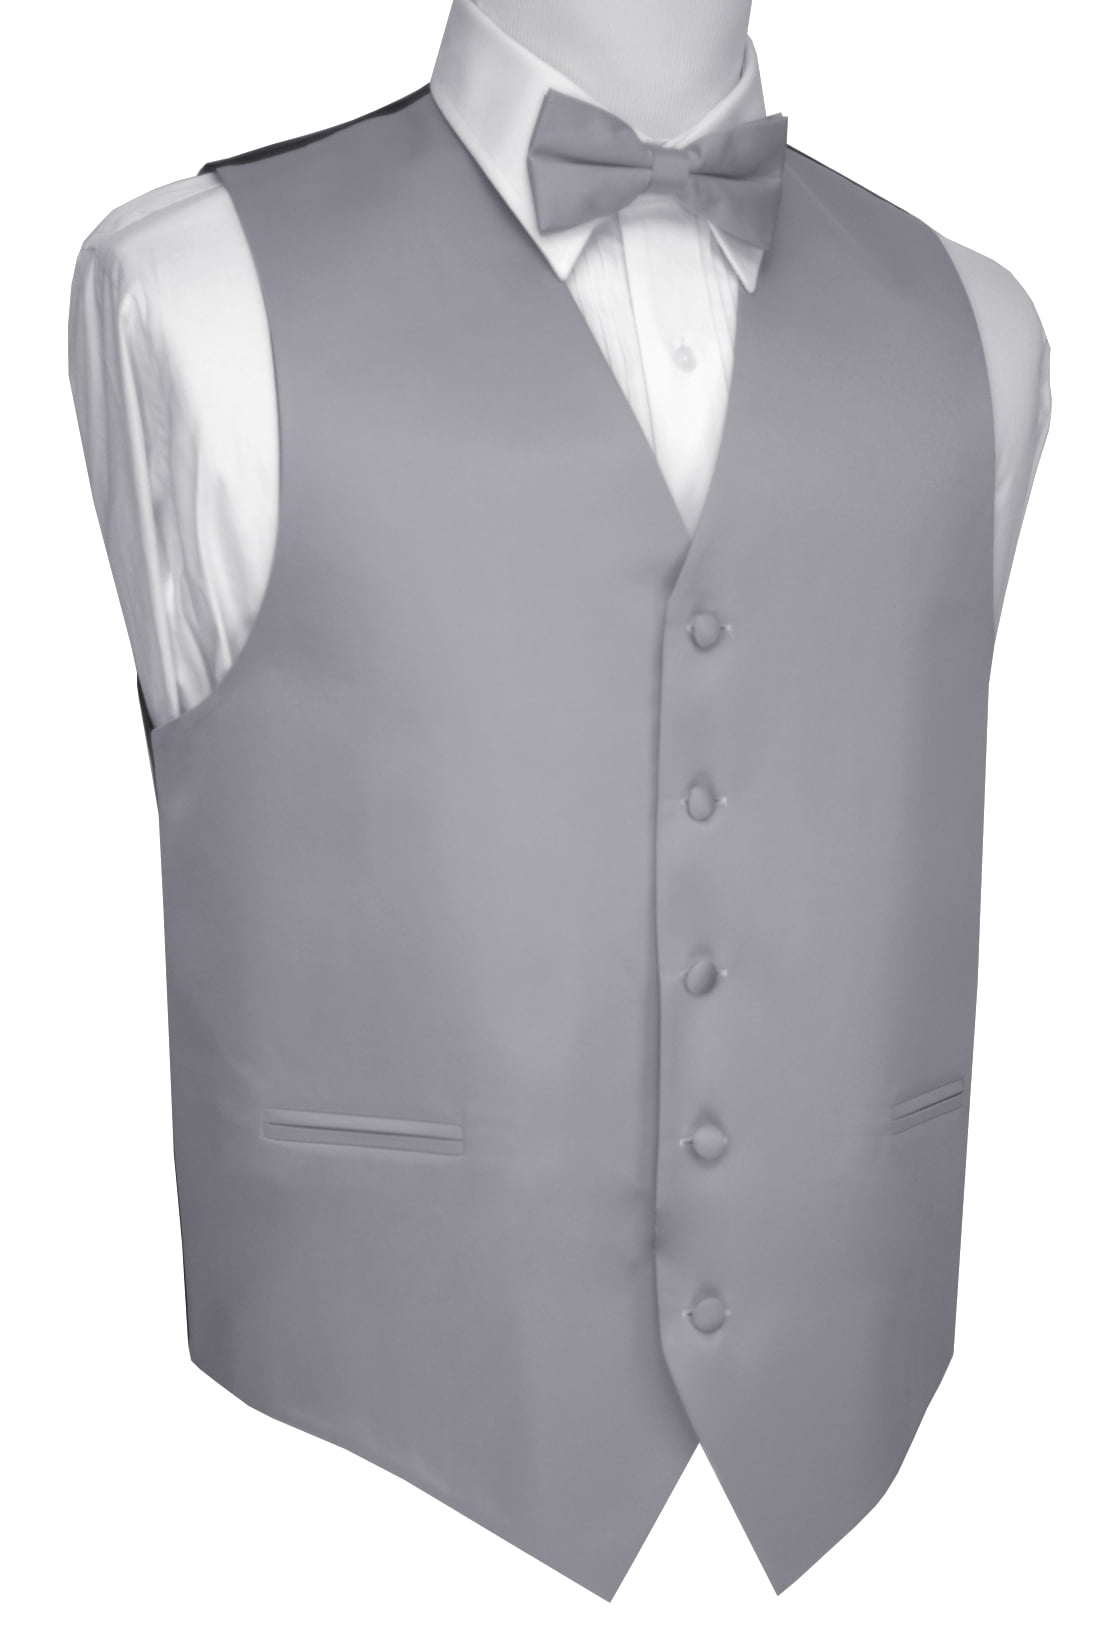 New formal men's tuxedo vest waistcoat & bowtie horizontal stripes prom white 